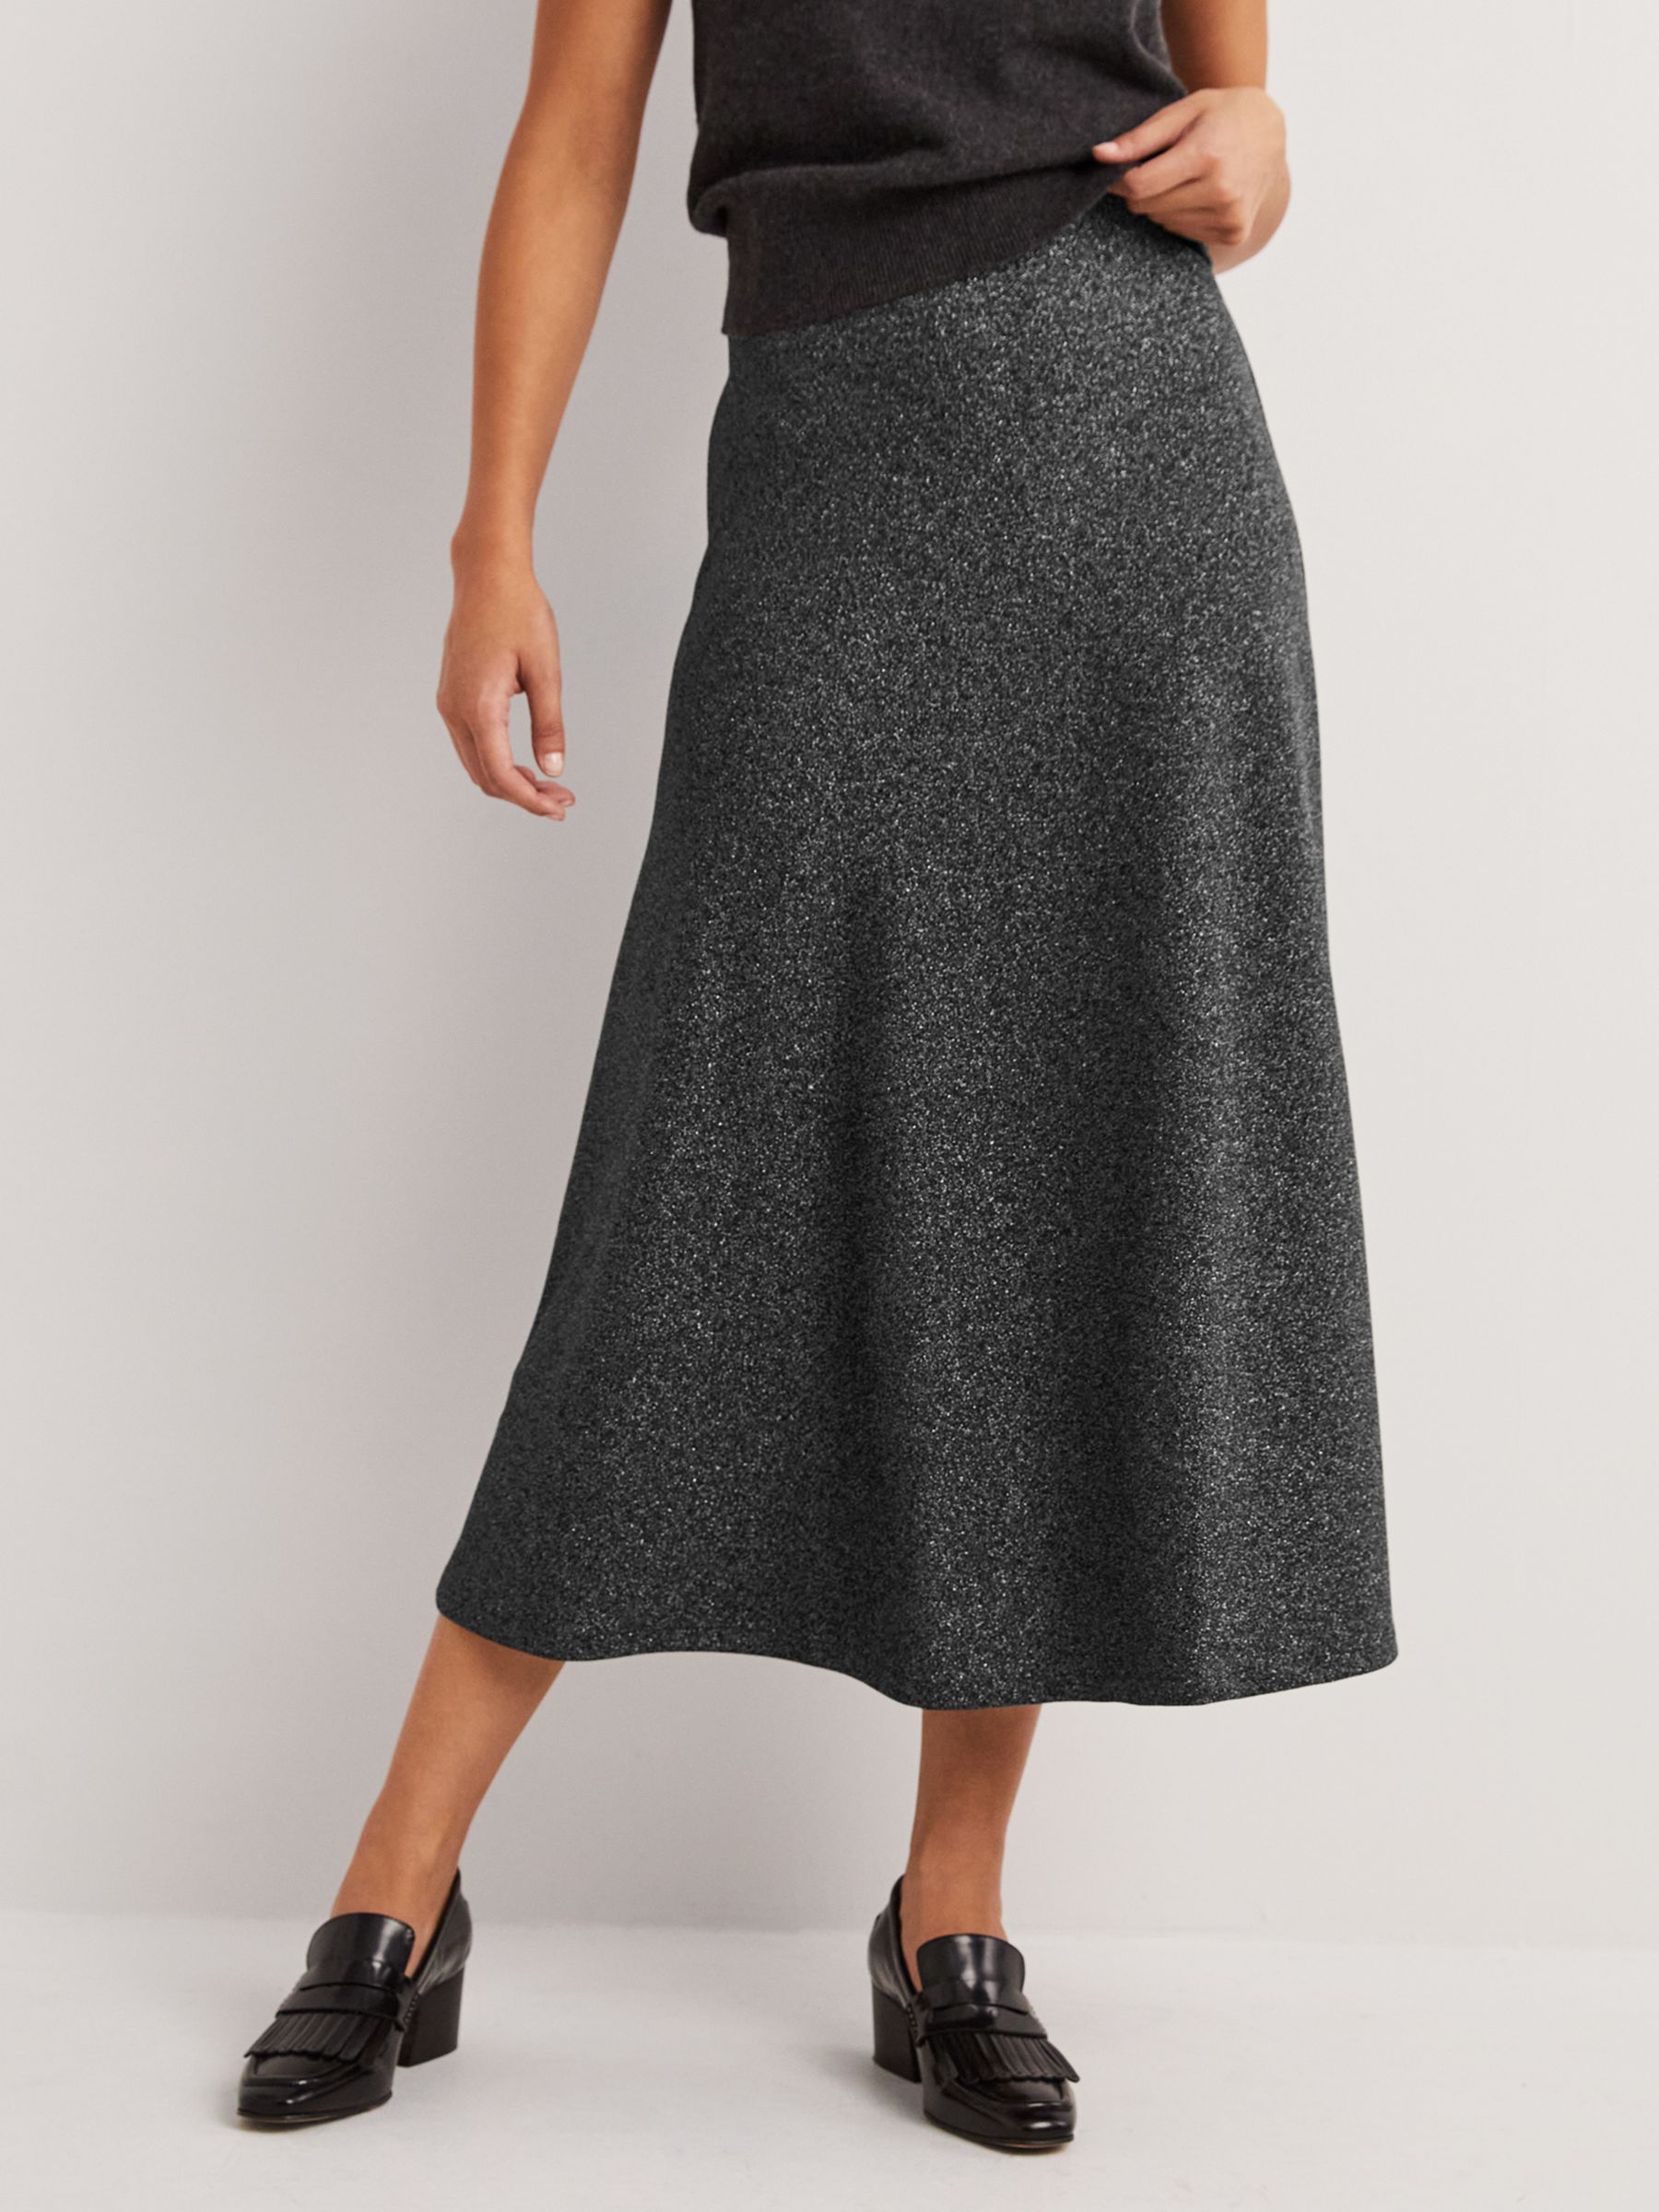 Buy Boden Metallic Jersey Skirt, Black/Silver Online at johnlewis.com